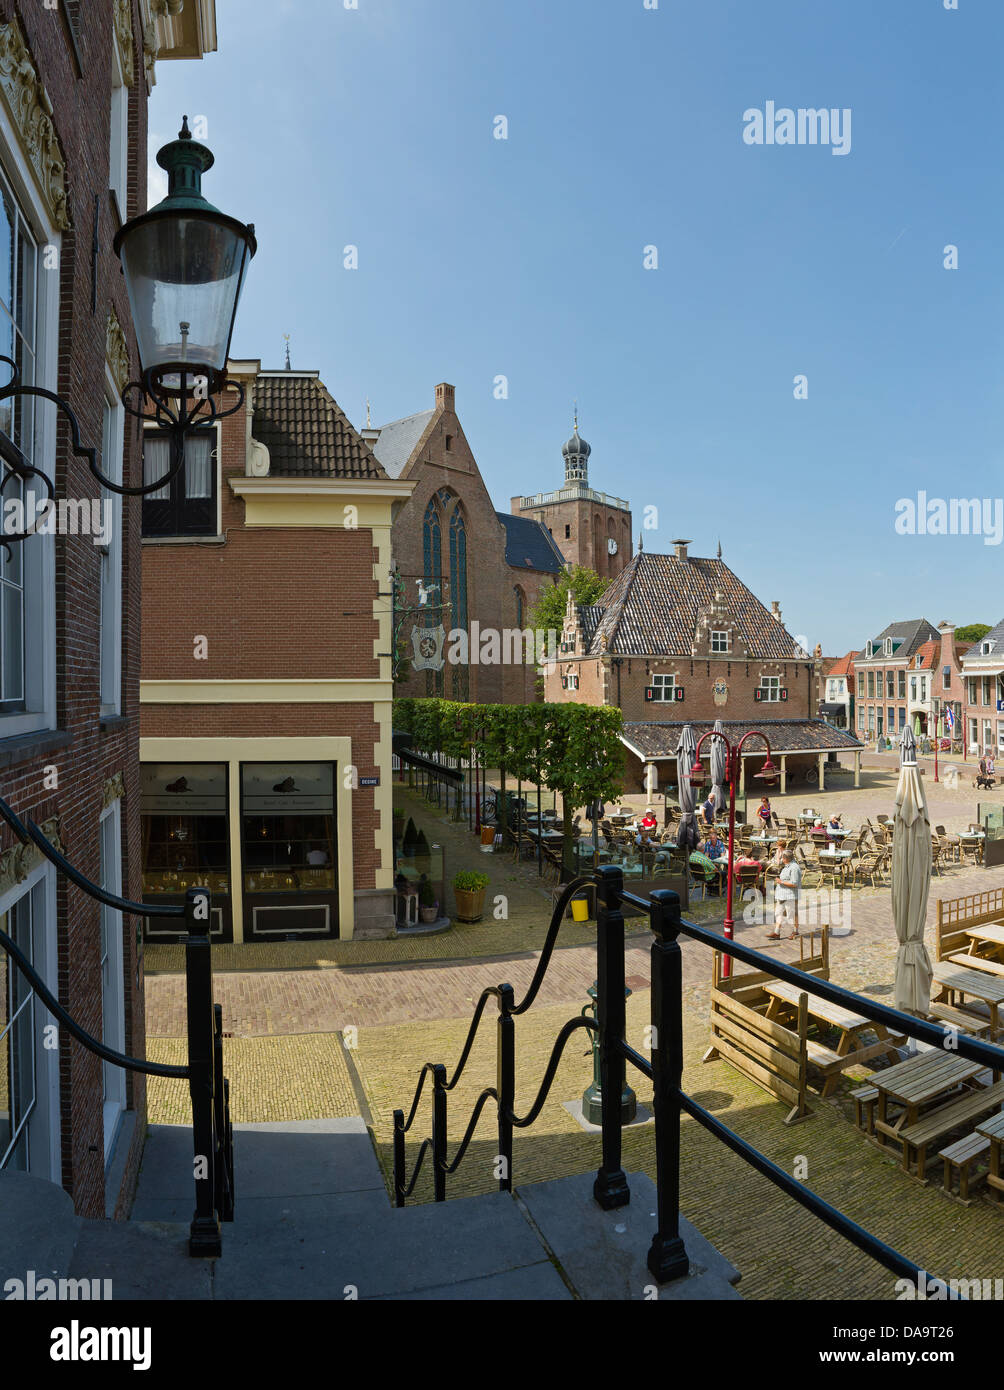 Netherlands, Holland, Europe, Workum, church, house, city, village, summer, people, outdoor, cafe, Stock Photo